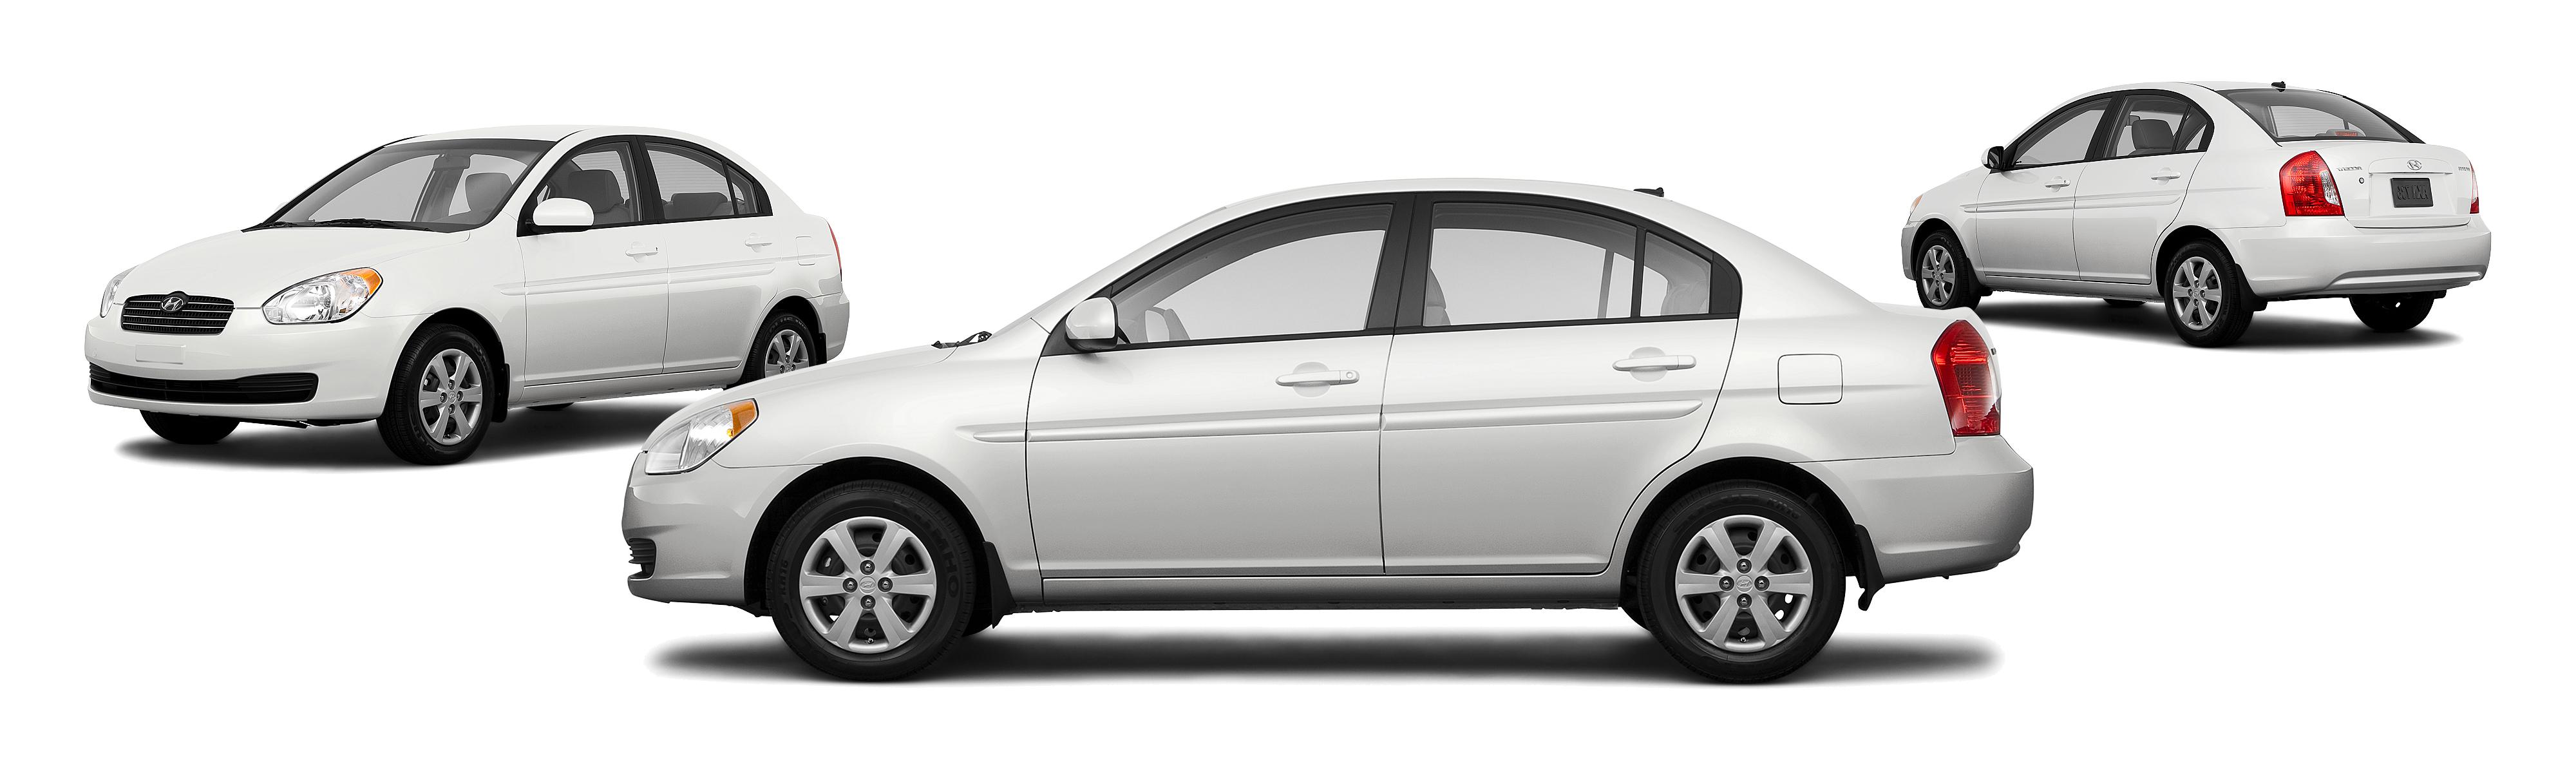 2011 Hyundai ACCENT GLS 4dr Sedan - Research - GrooveCar